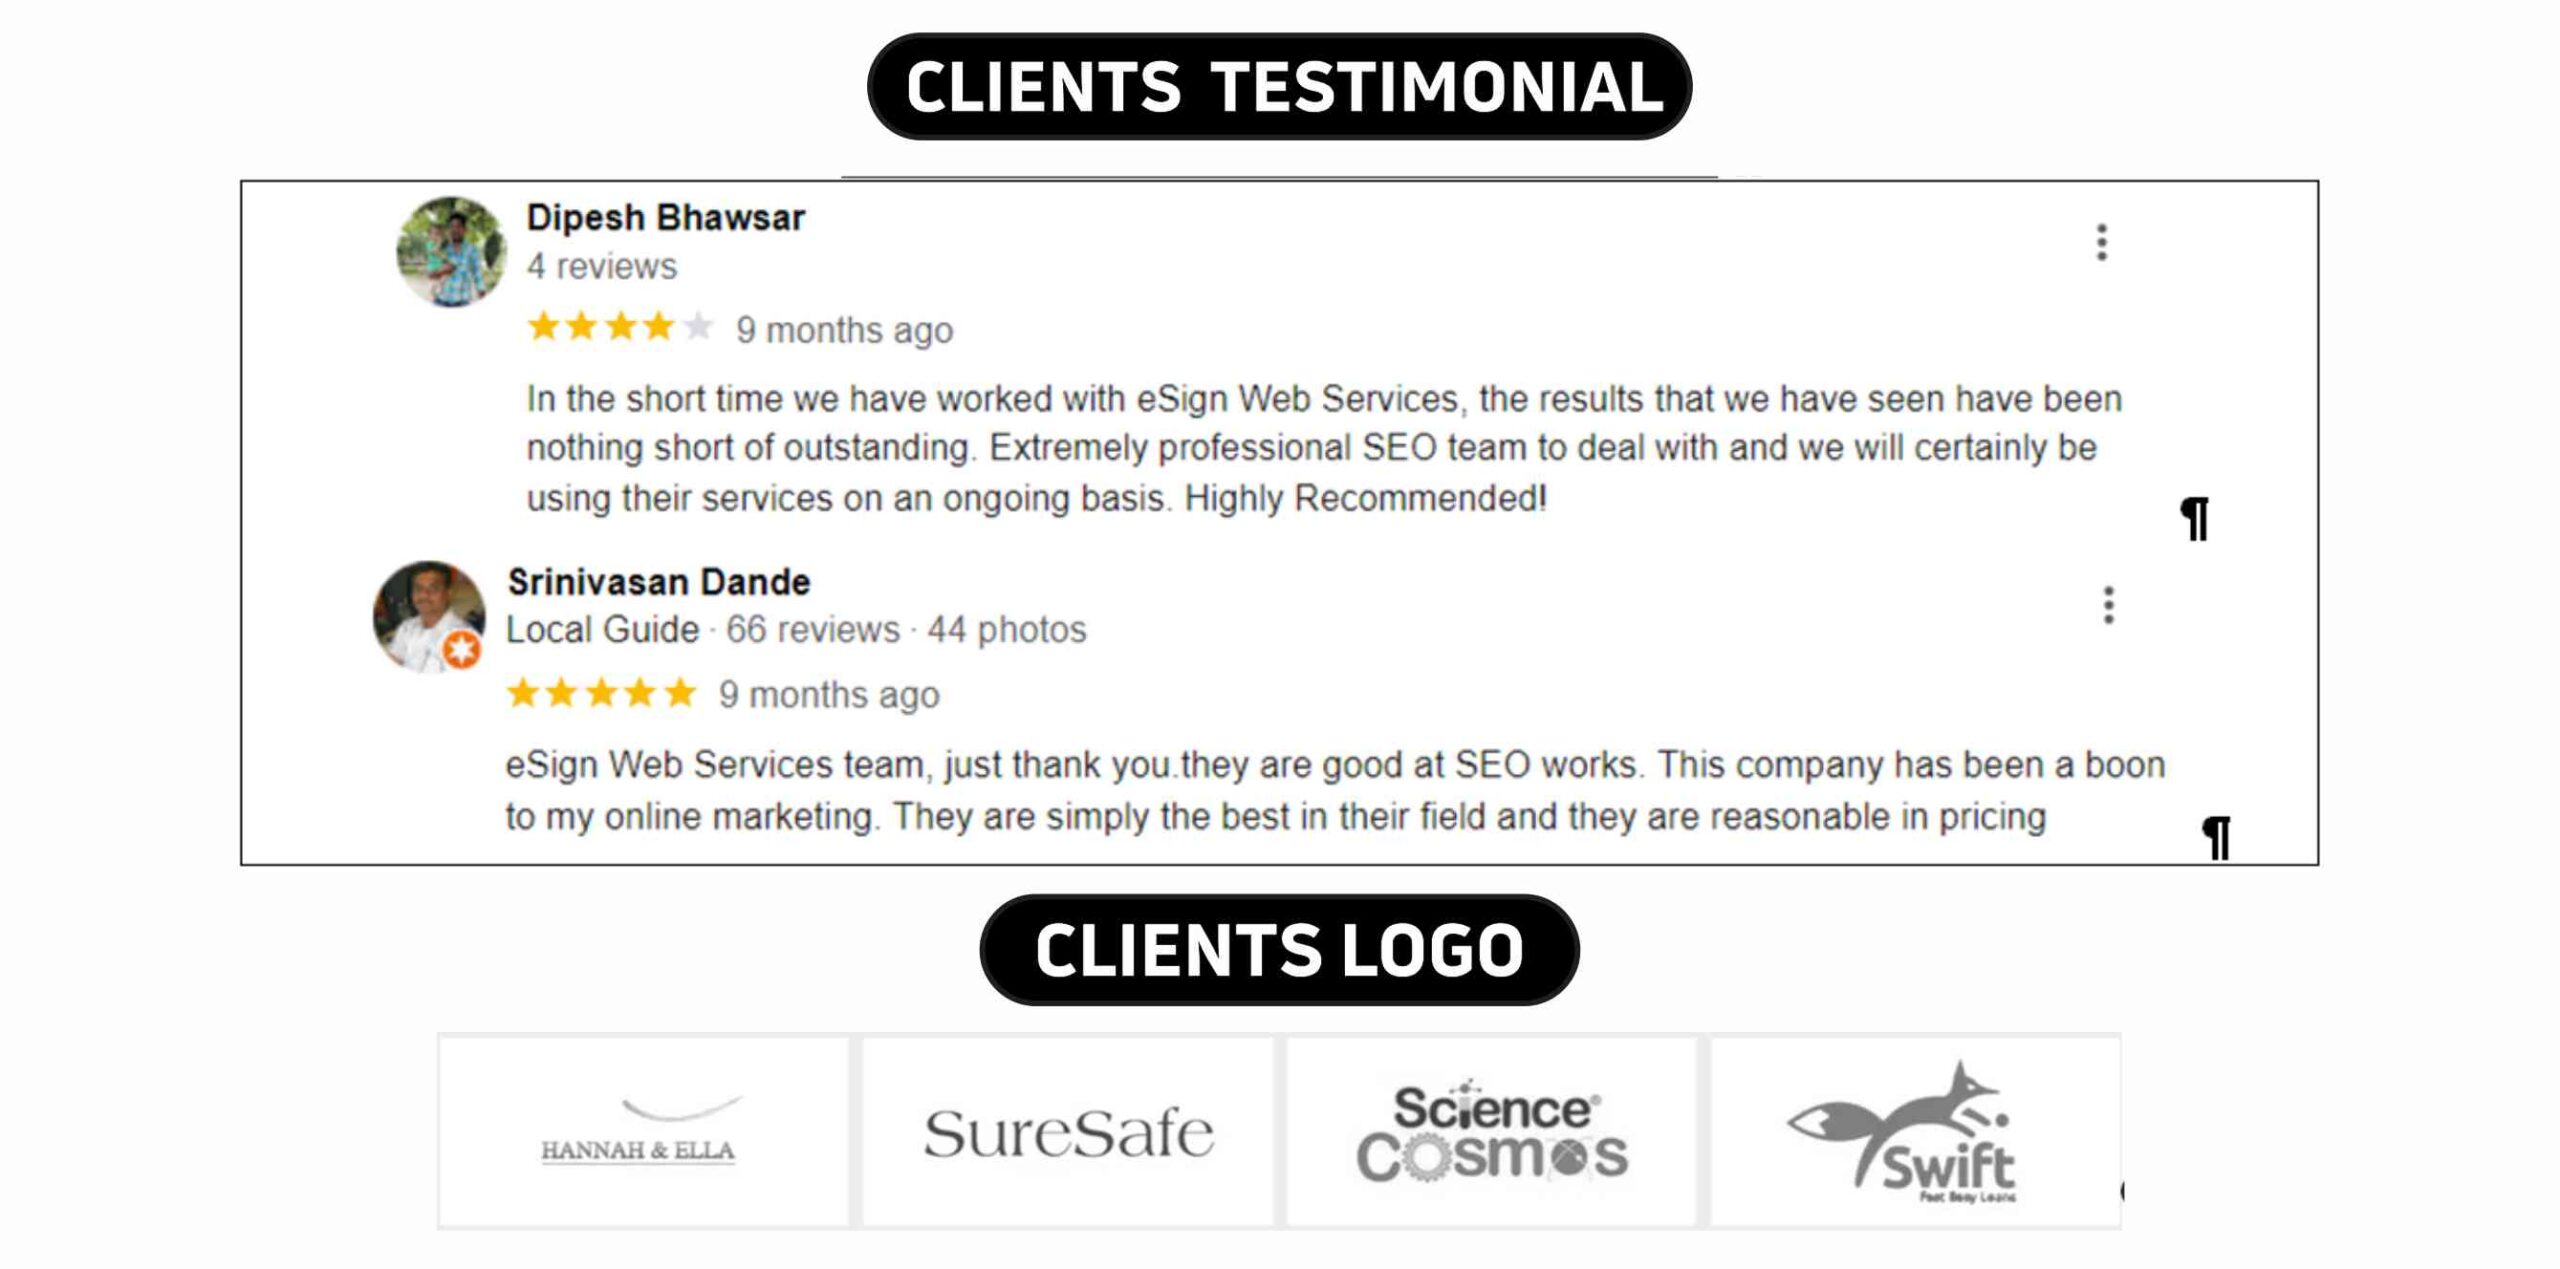 eSign Web Services Pvt Ltd Client testimonial & Logos 